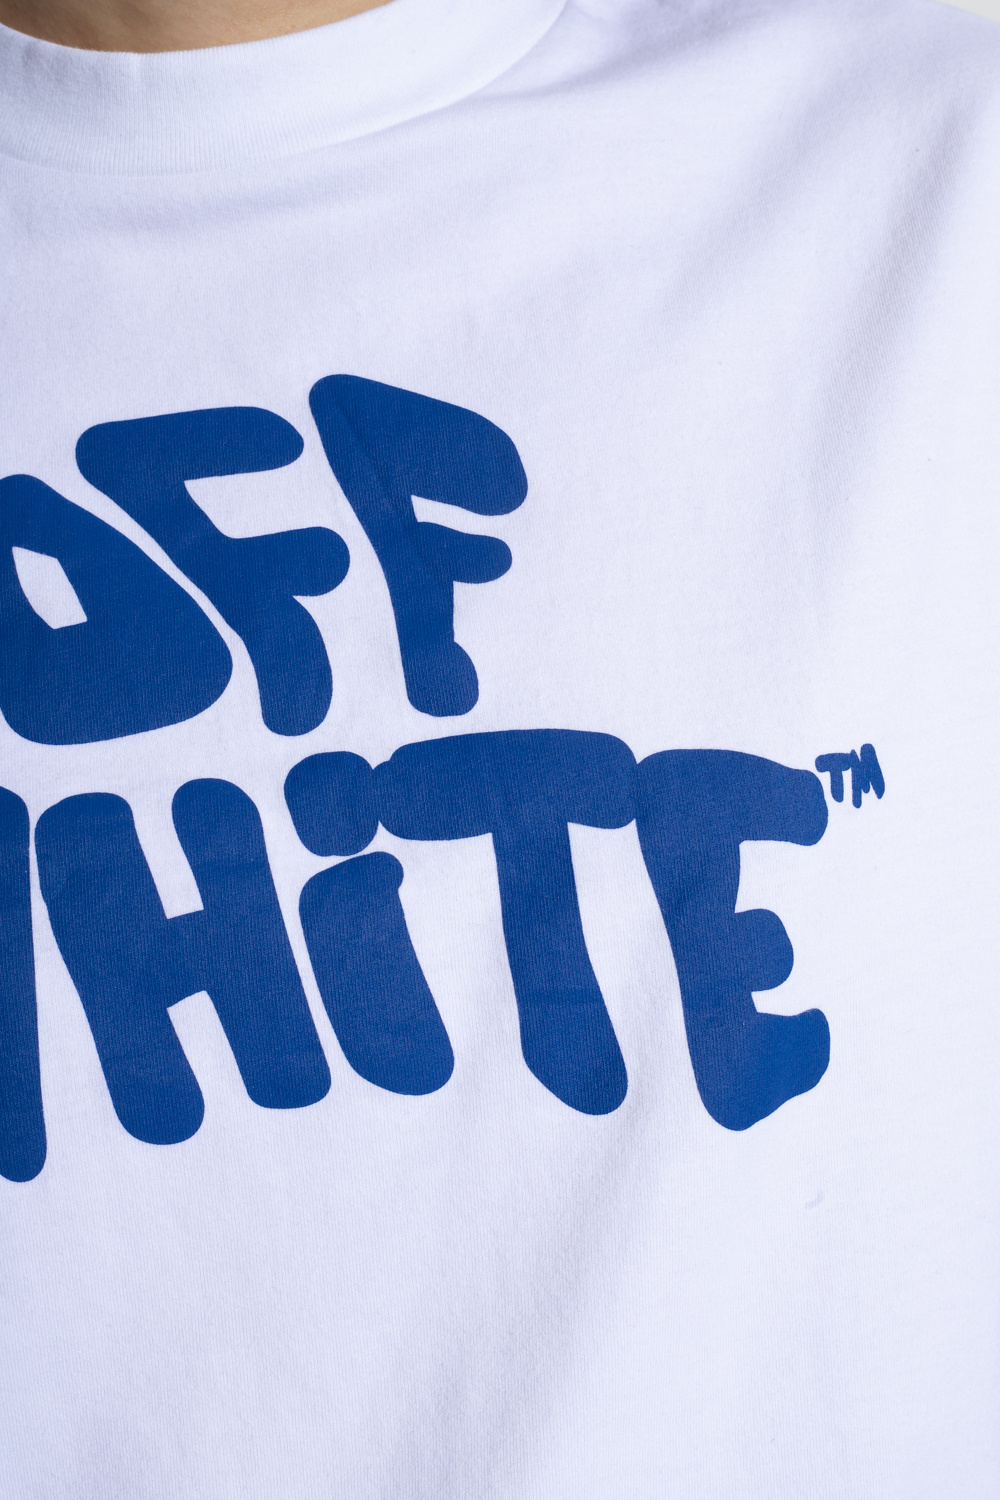 Off-White adidas Freelift T Shirt Mens